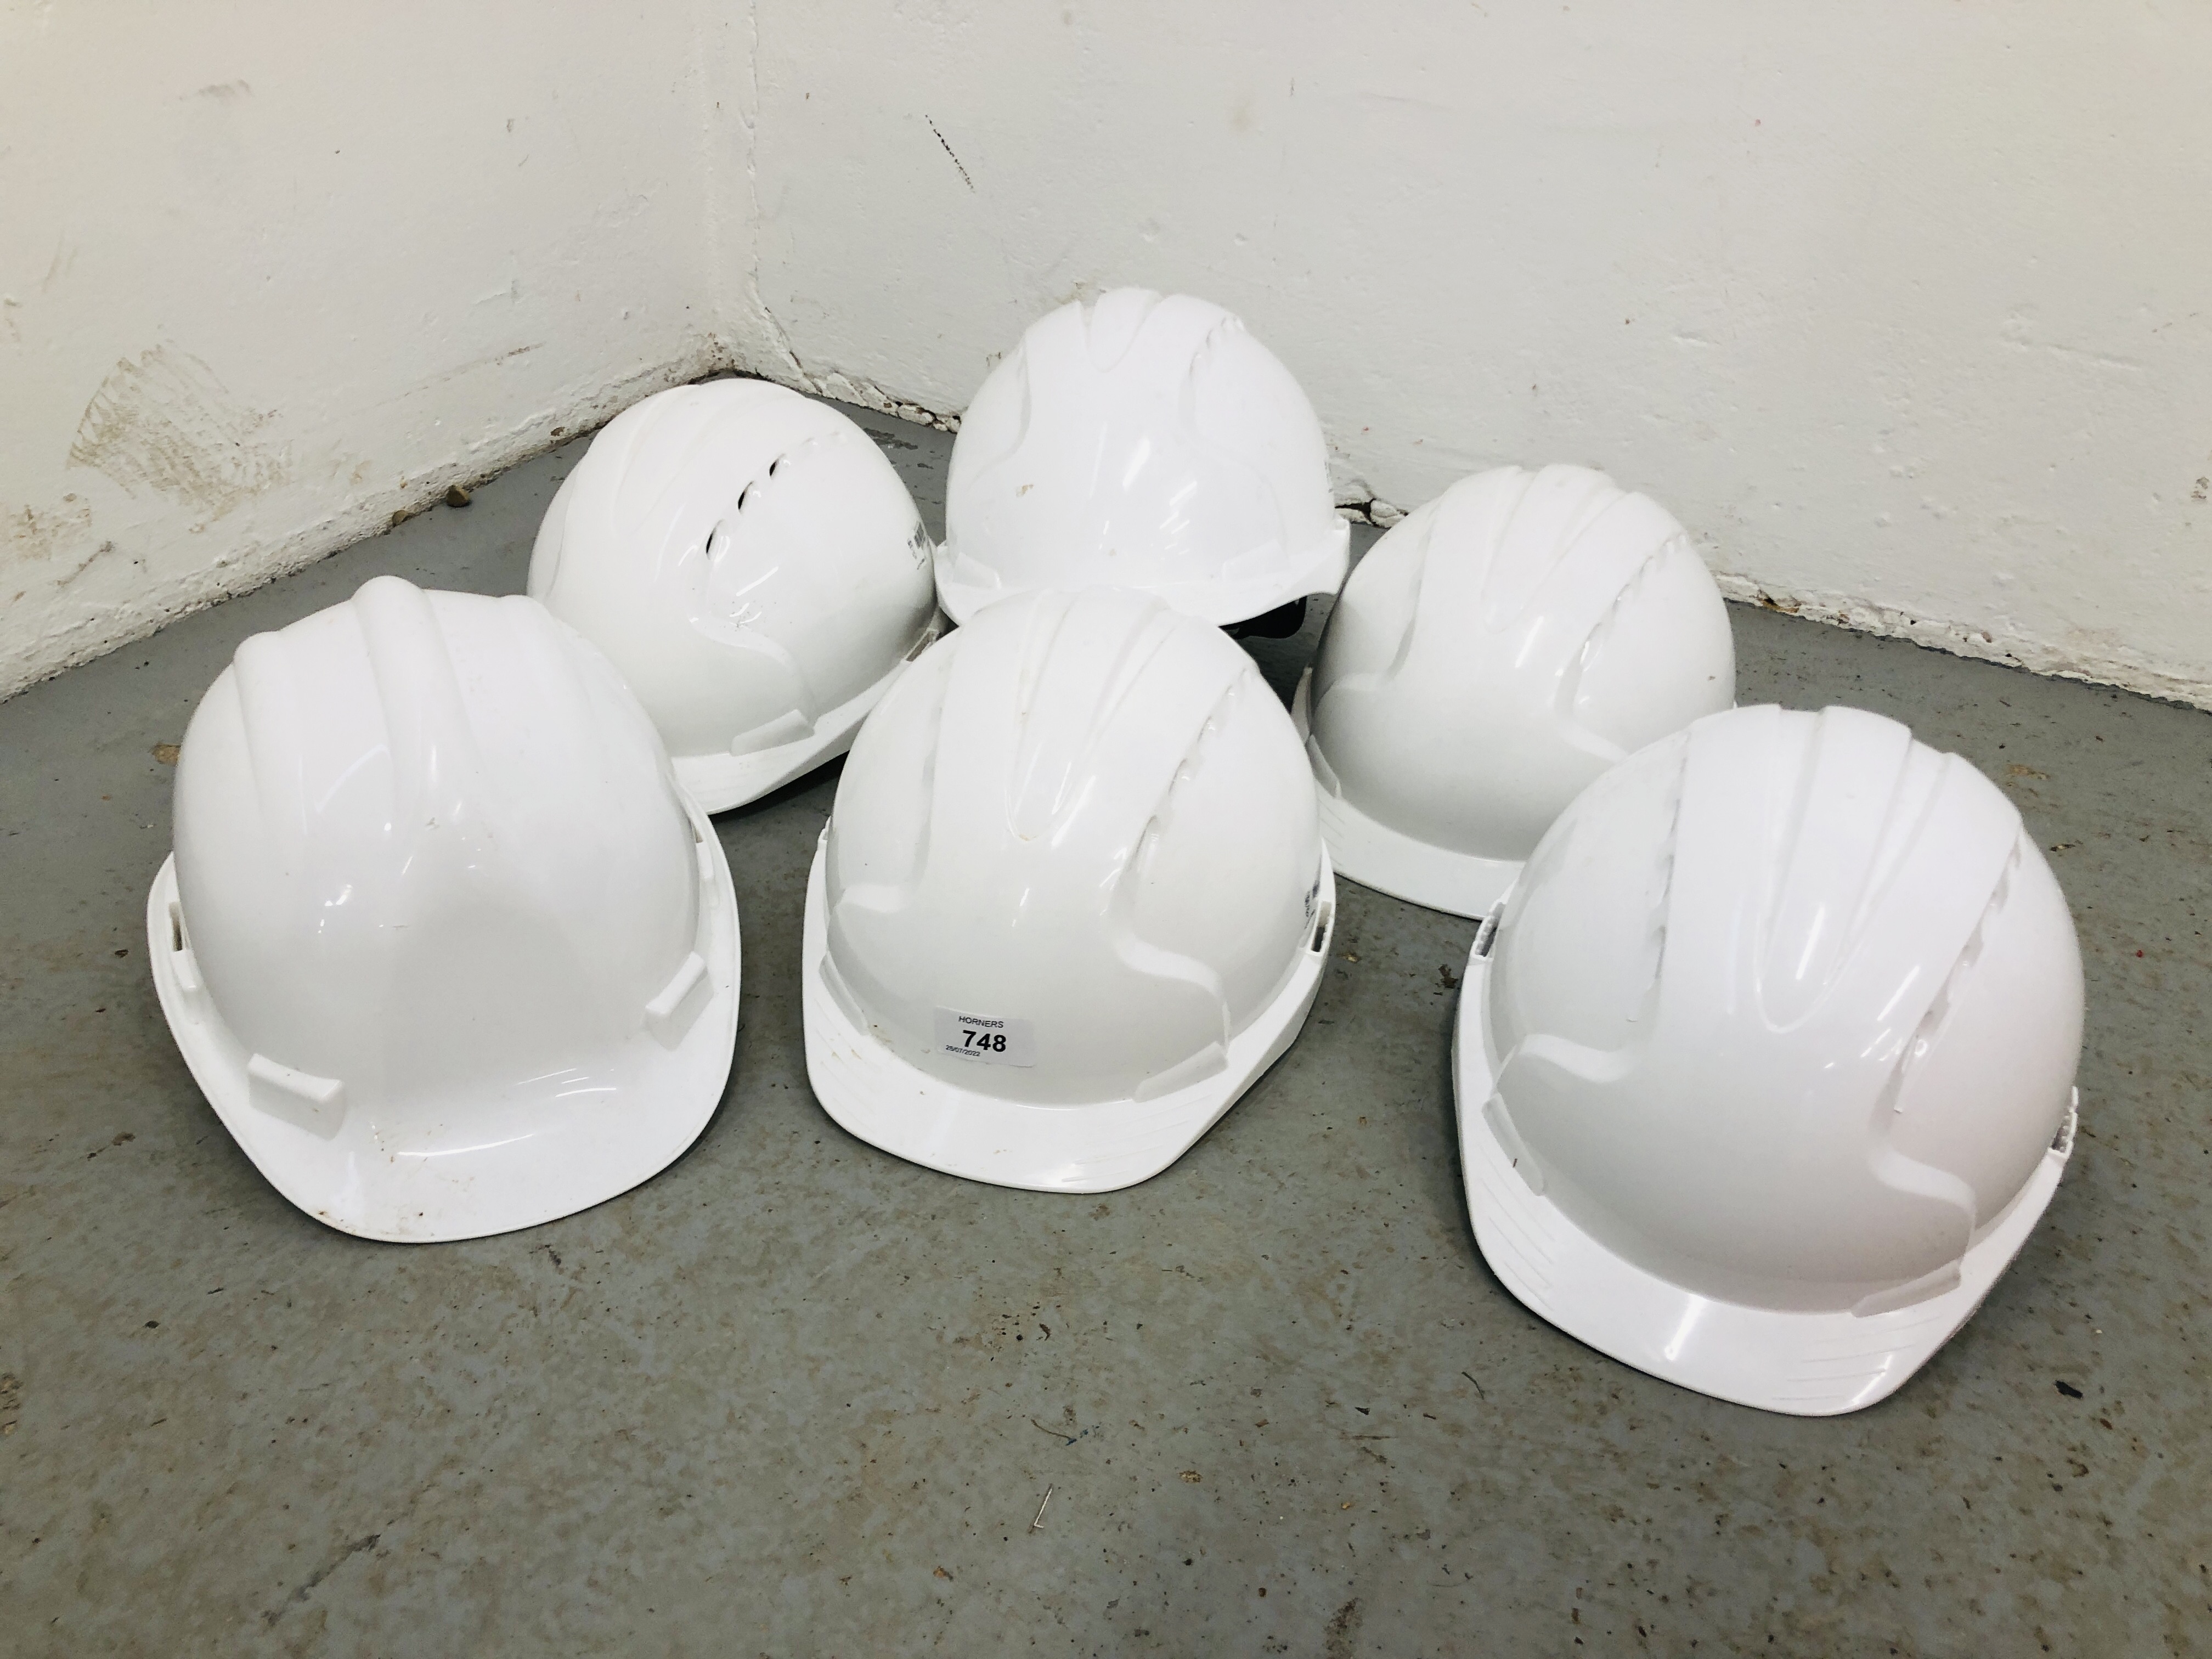 SIX BUILDER'S HARD HATS